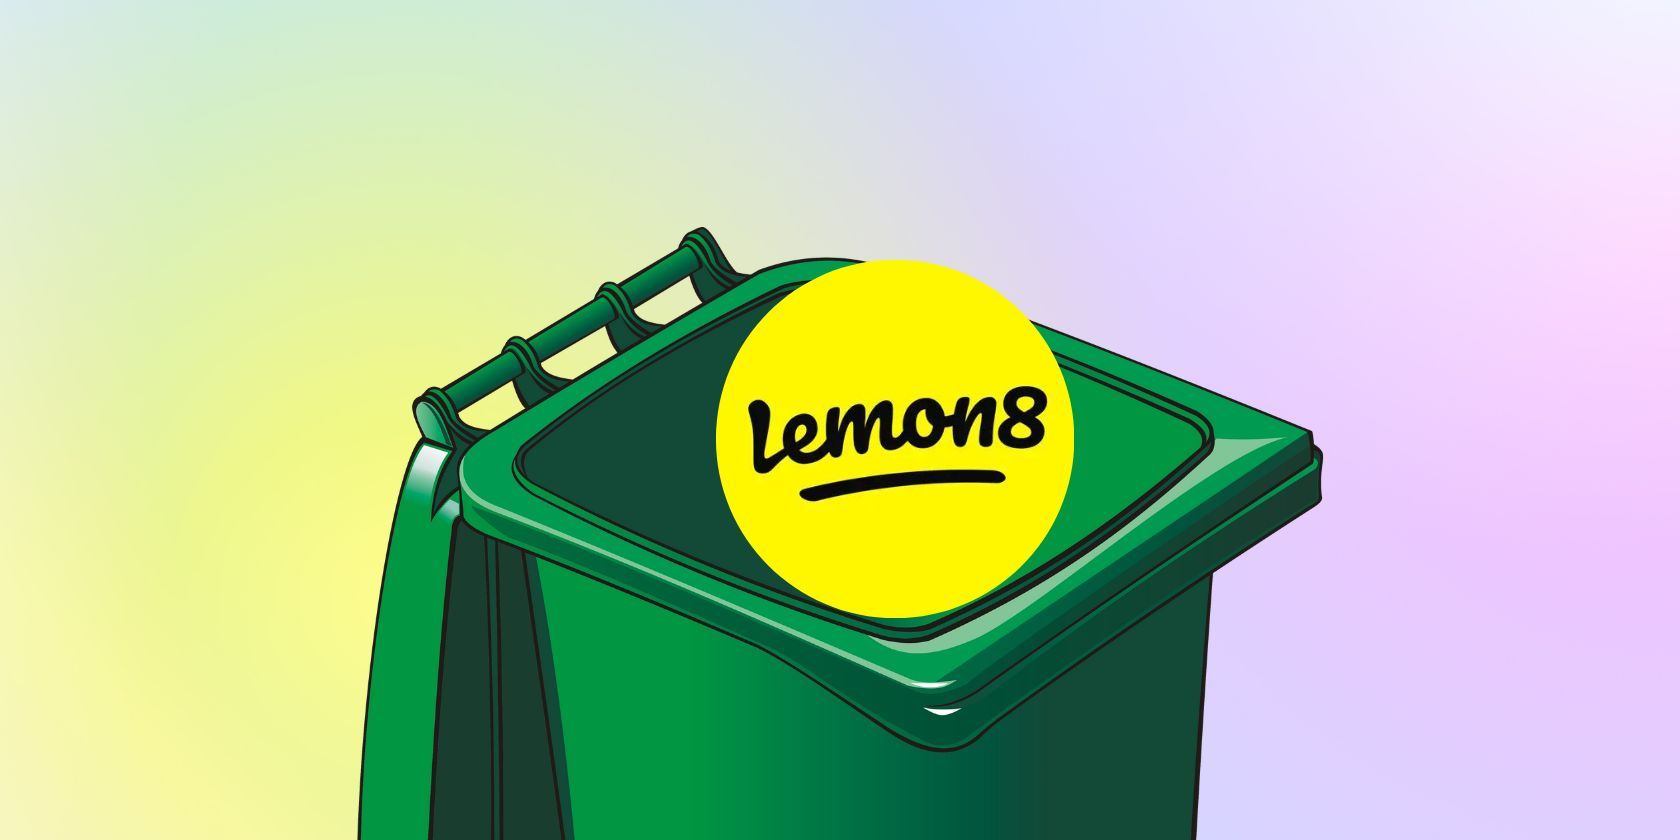 Lemon8 Logo in trash can